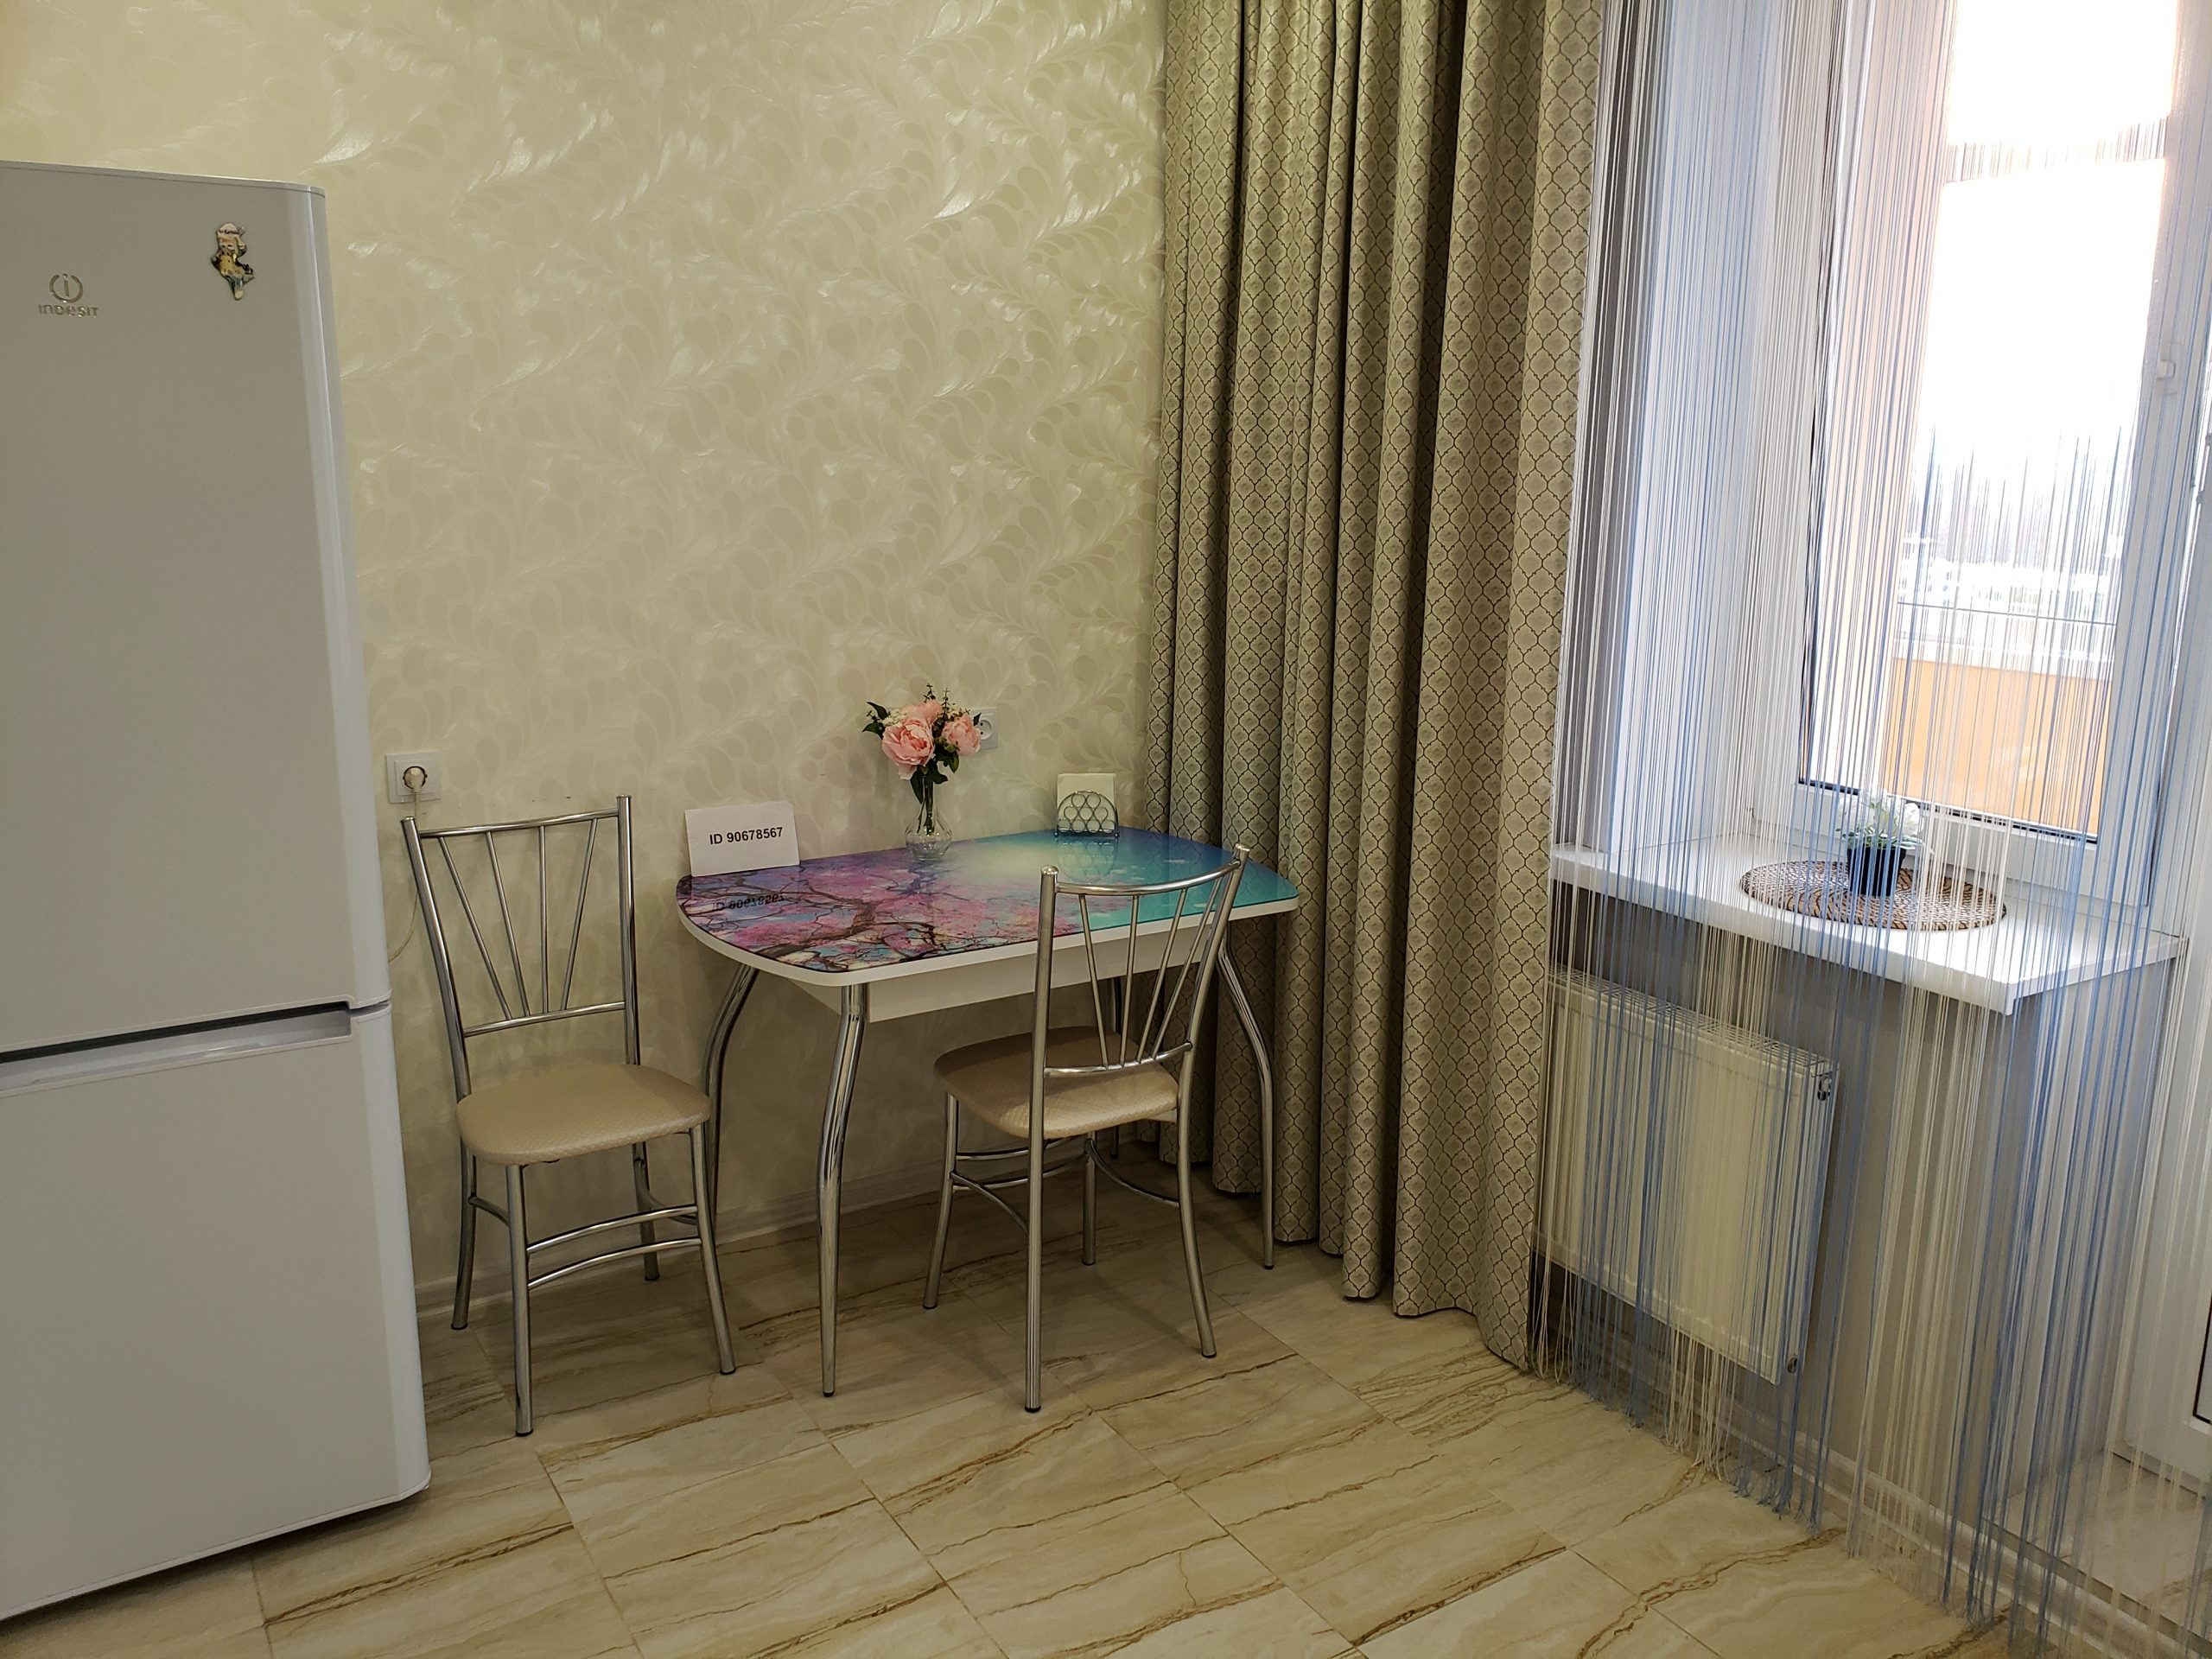 Однокомнатная квартира на  ул. Короленко, д. 8 (35кв.м)до 2 гостей